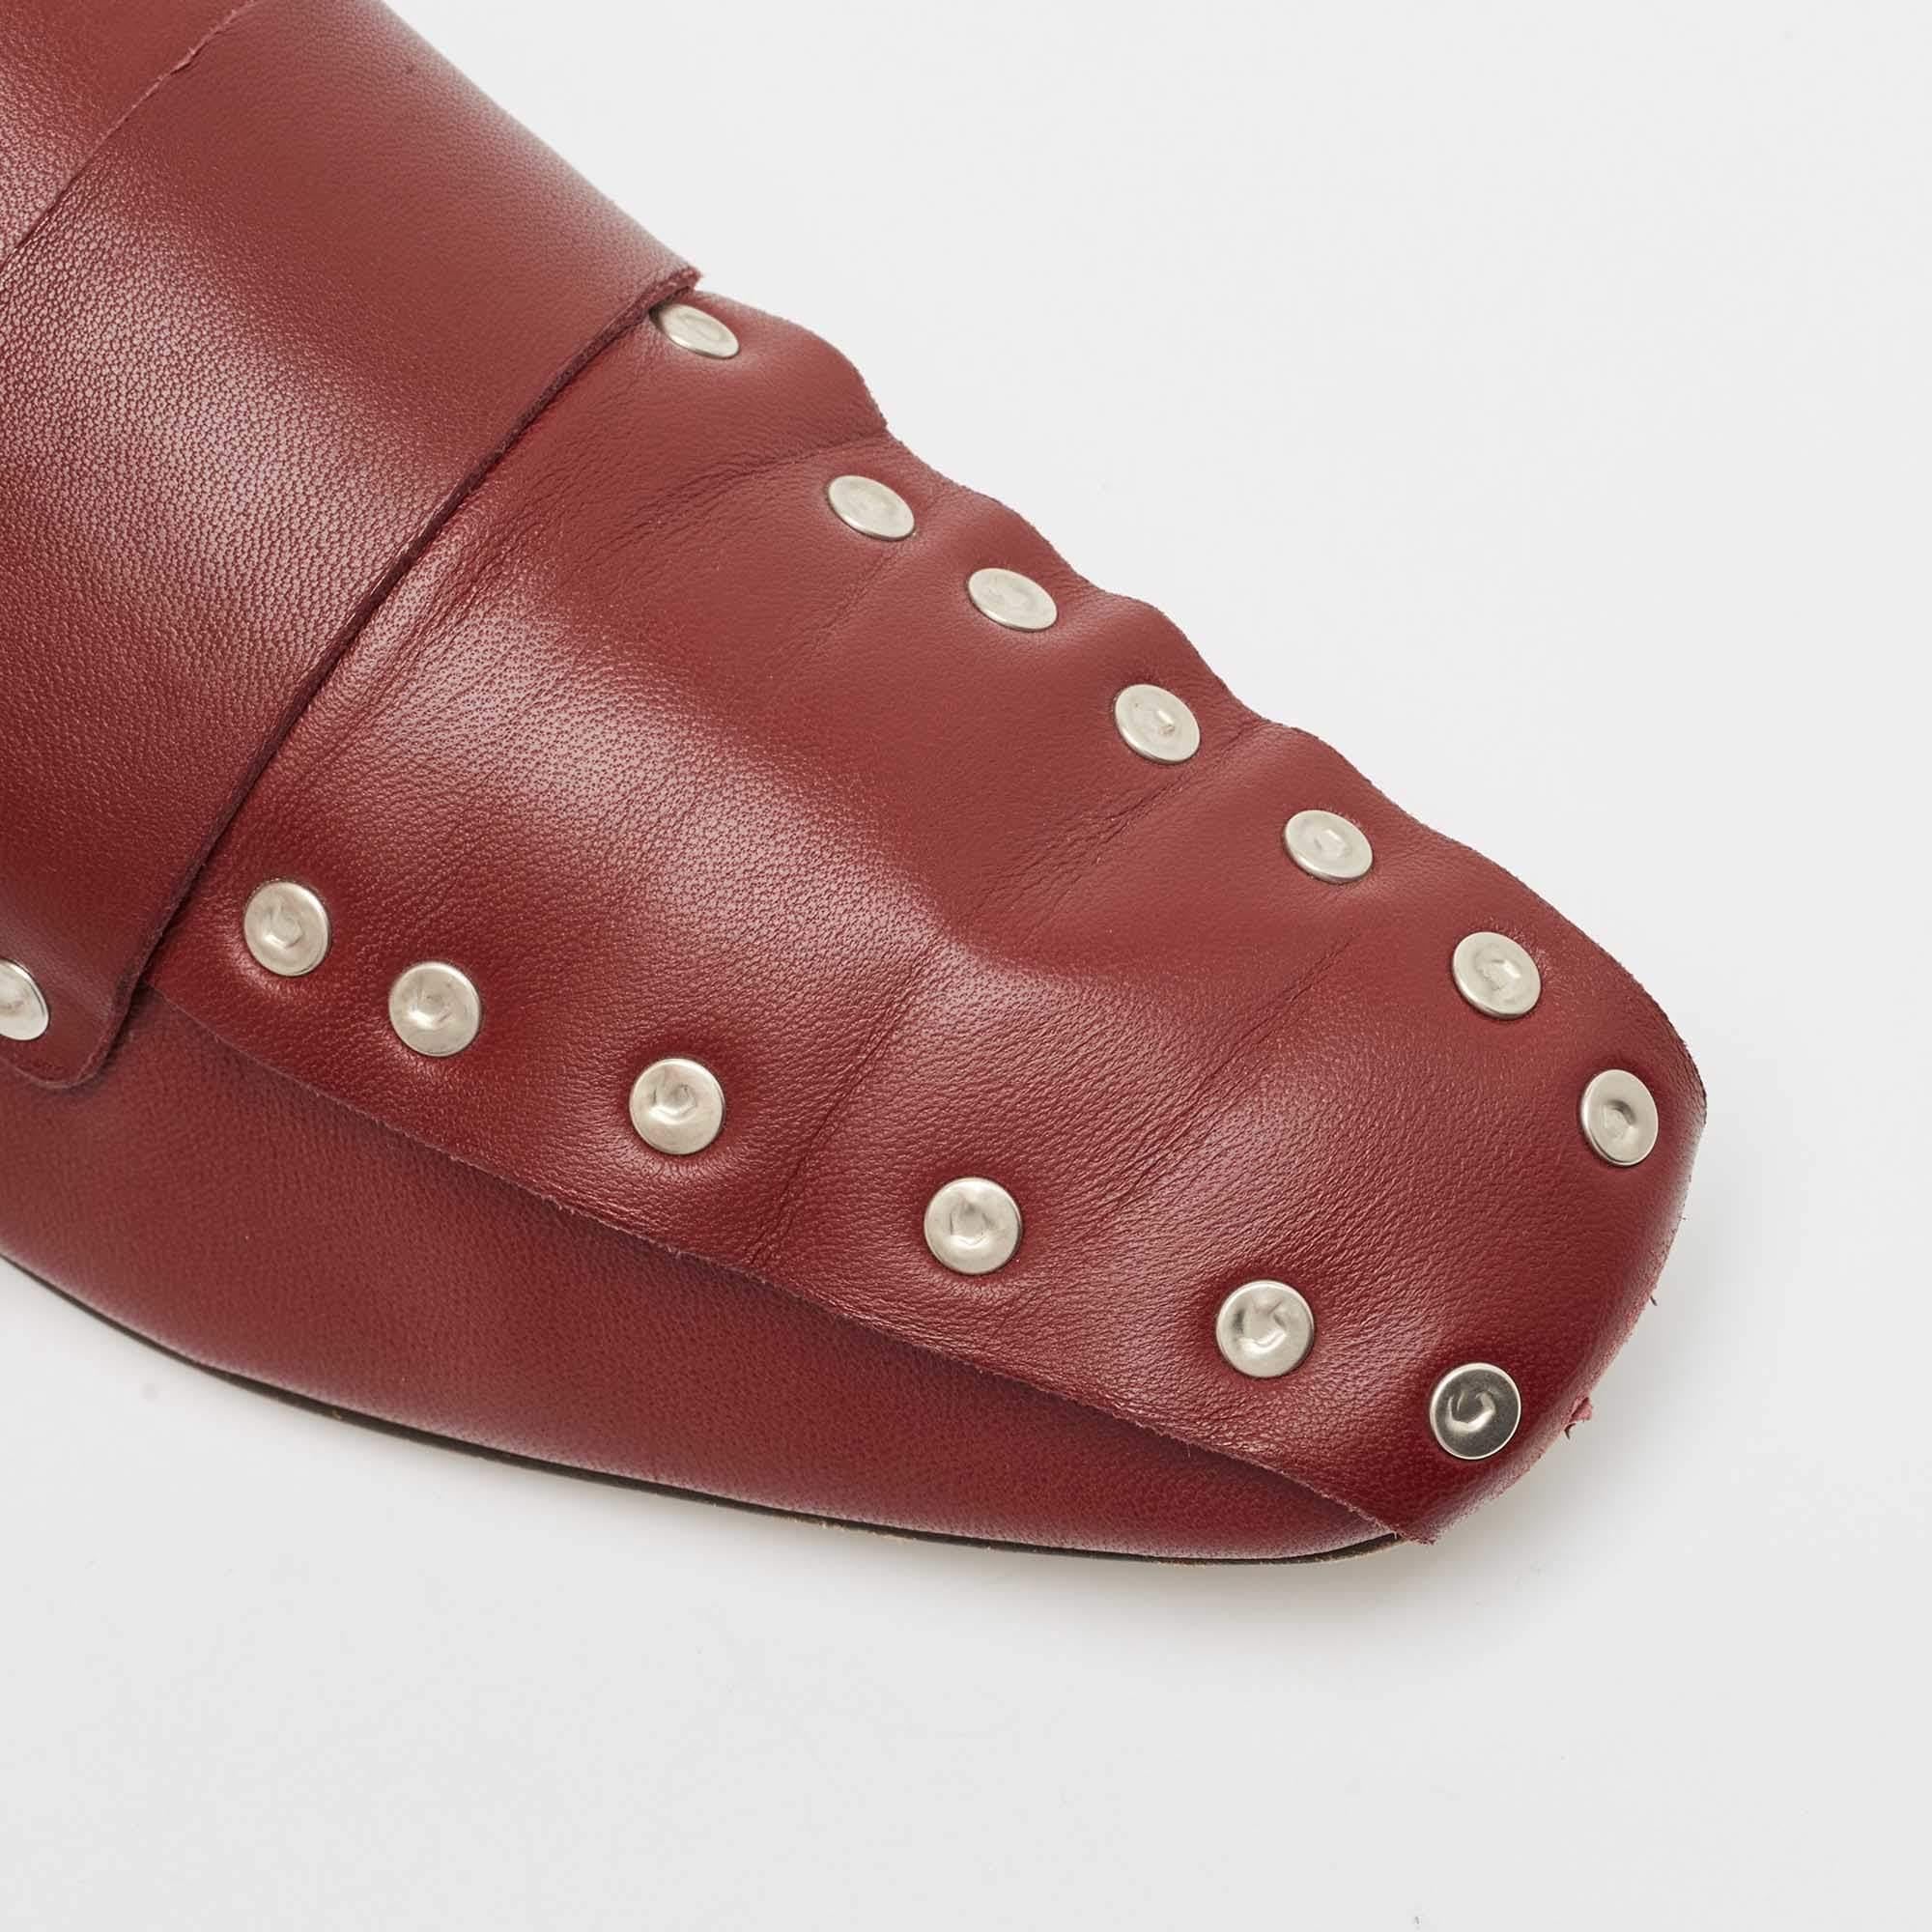 Celine Red Leather Slip On Loafers Size 38 4